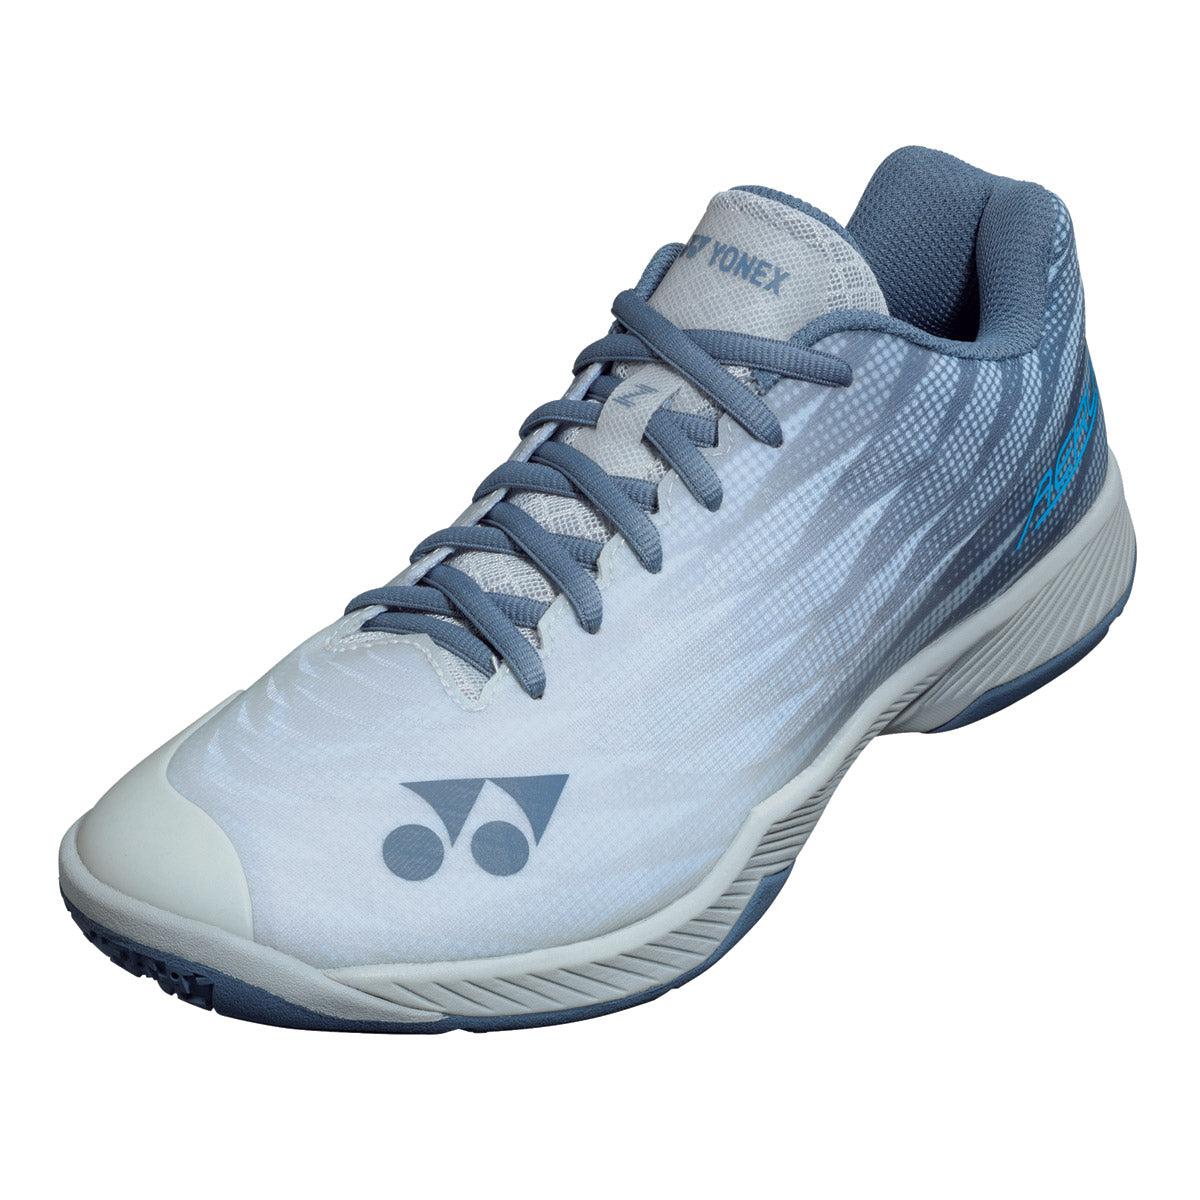 Yonex Mens Aerus Z2 Badminton Shoes - Blue/Gray